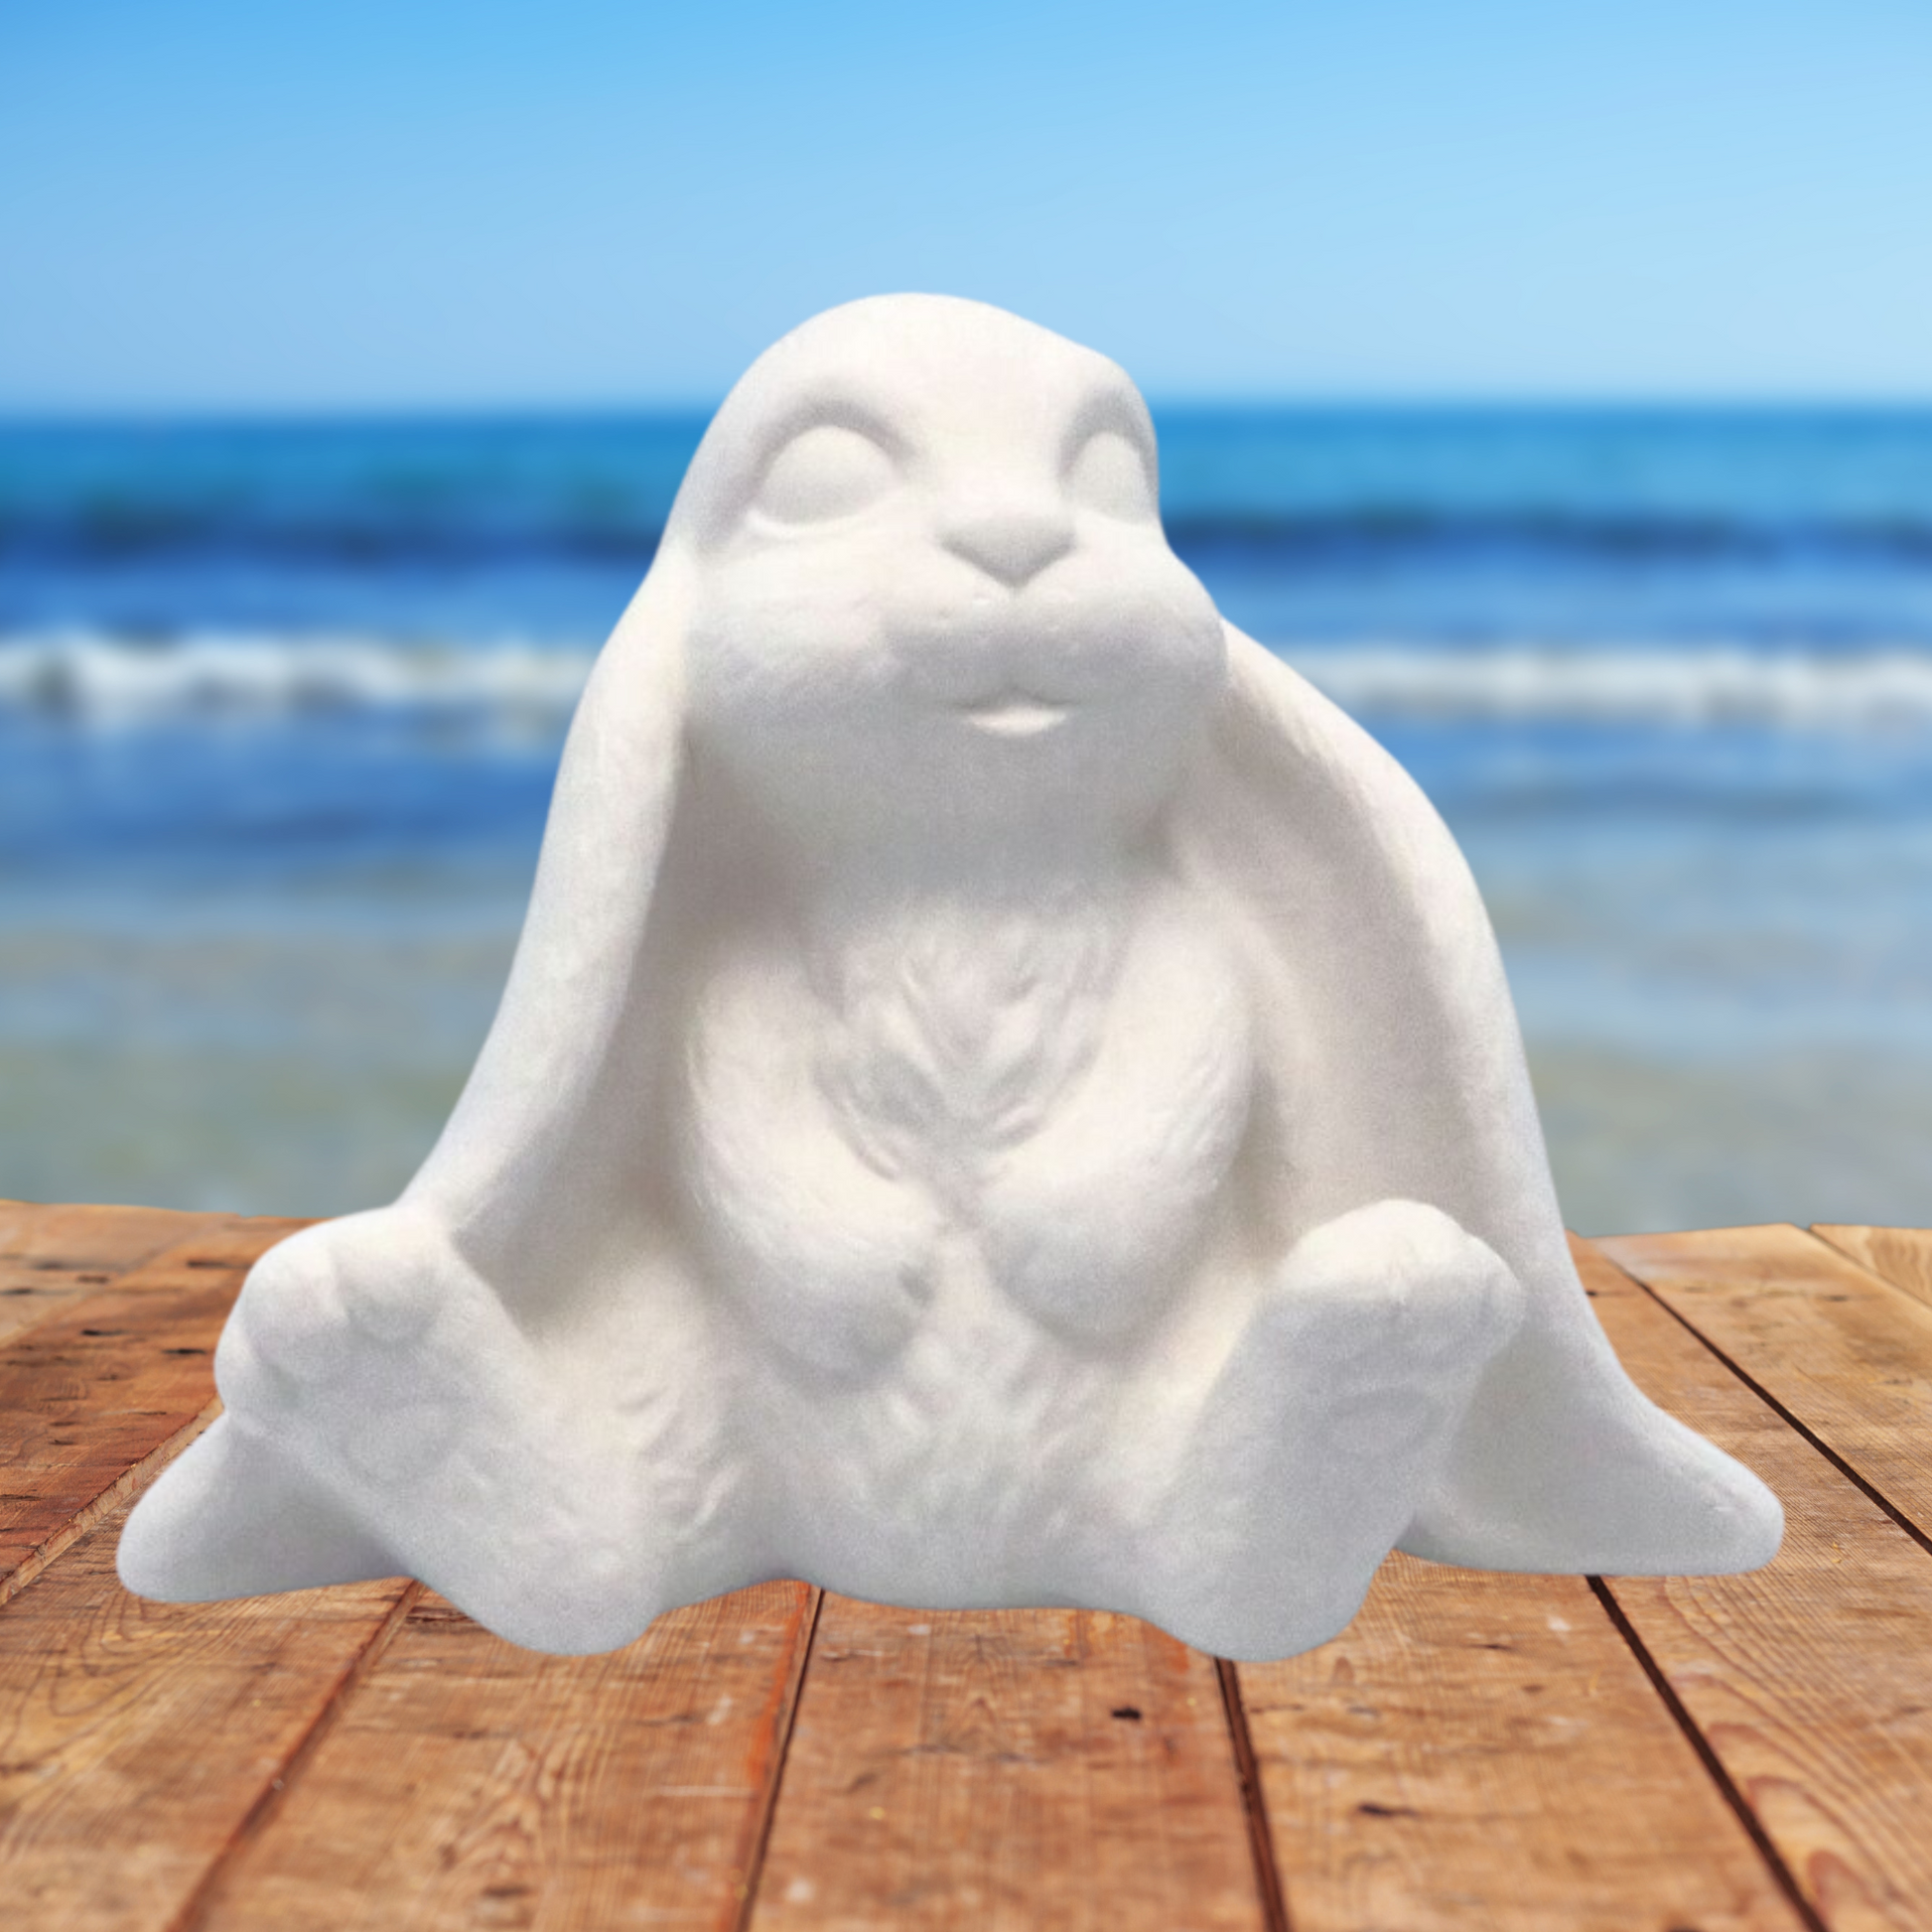 Handmade Ready to Paint Ceramic Lop Earred Bunny Figurine facing forward sitting on a table near the ocean